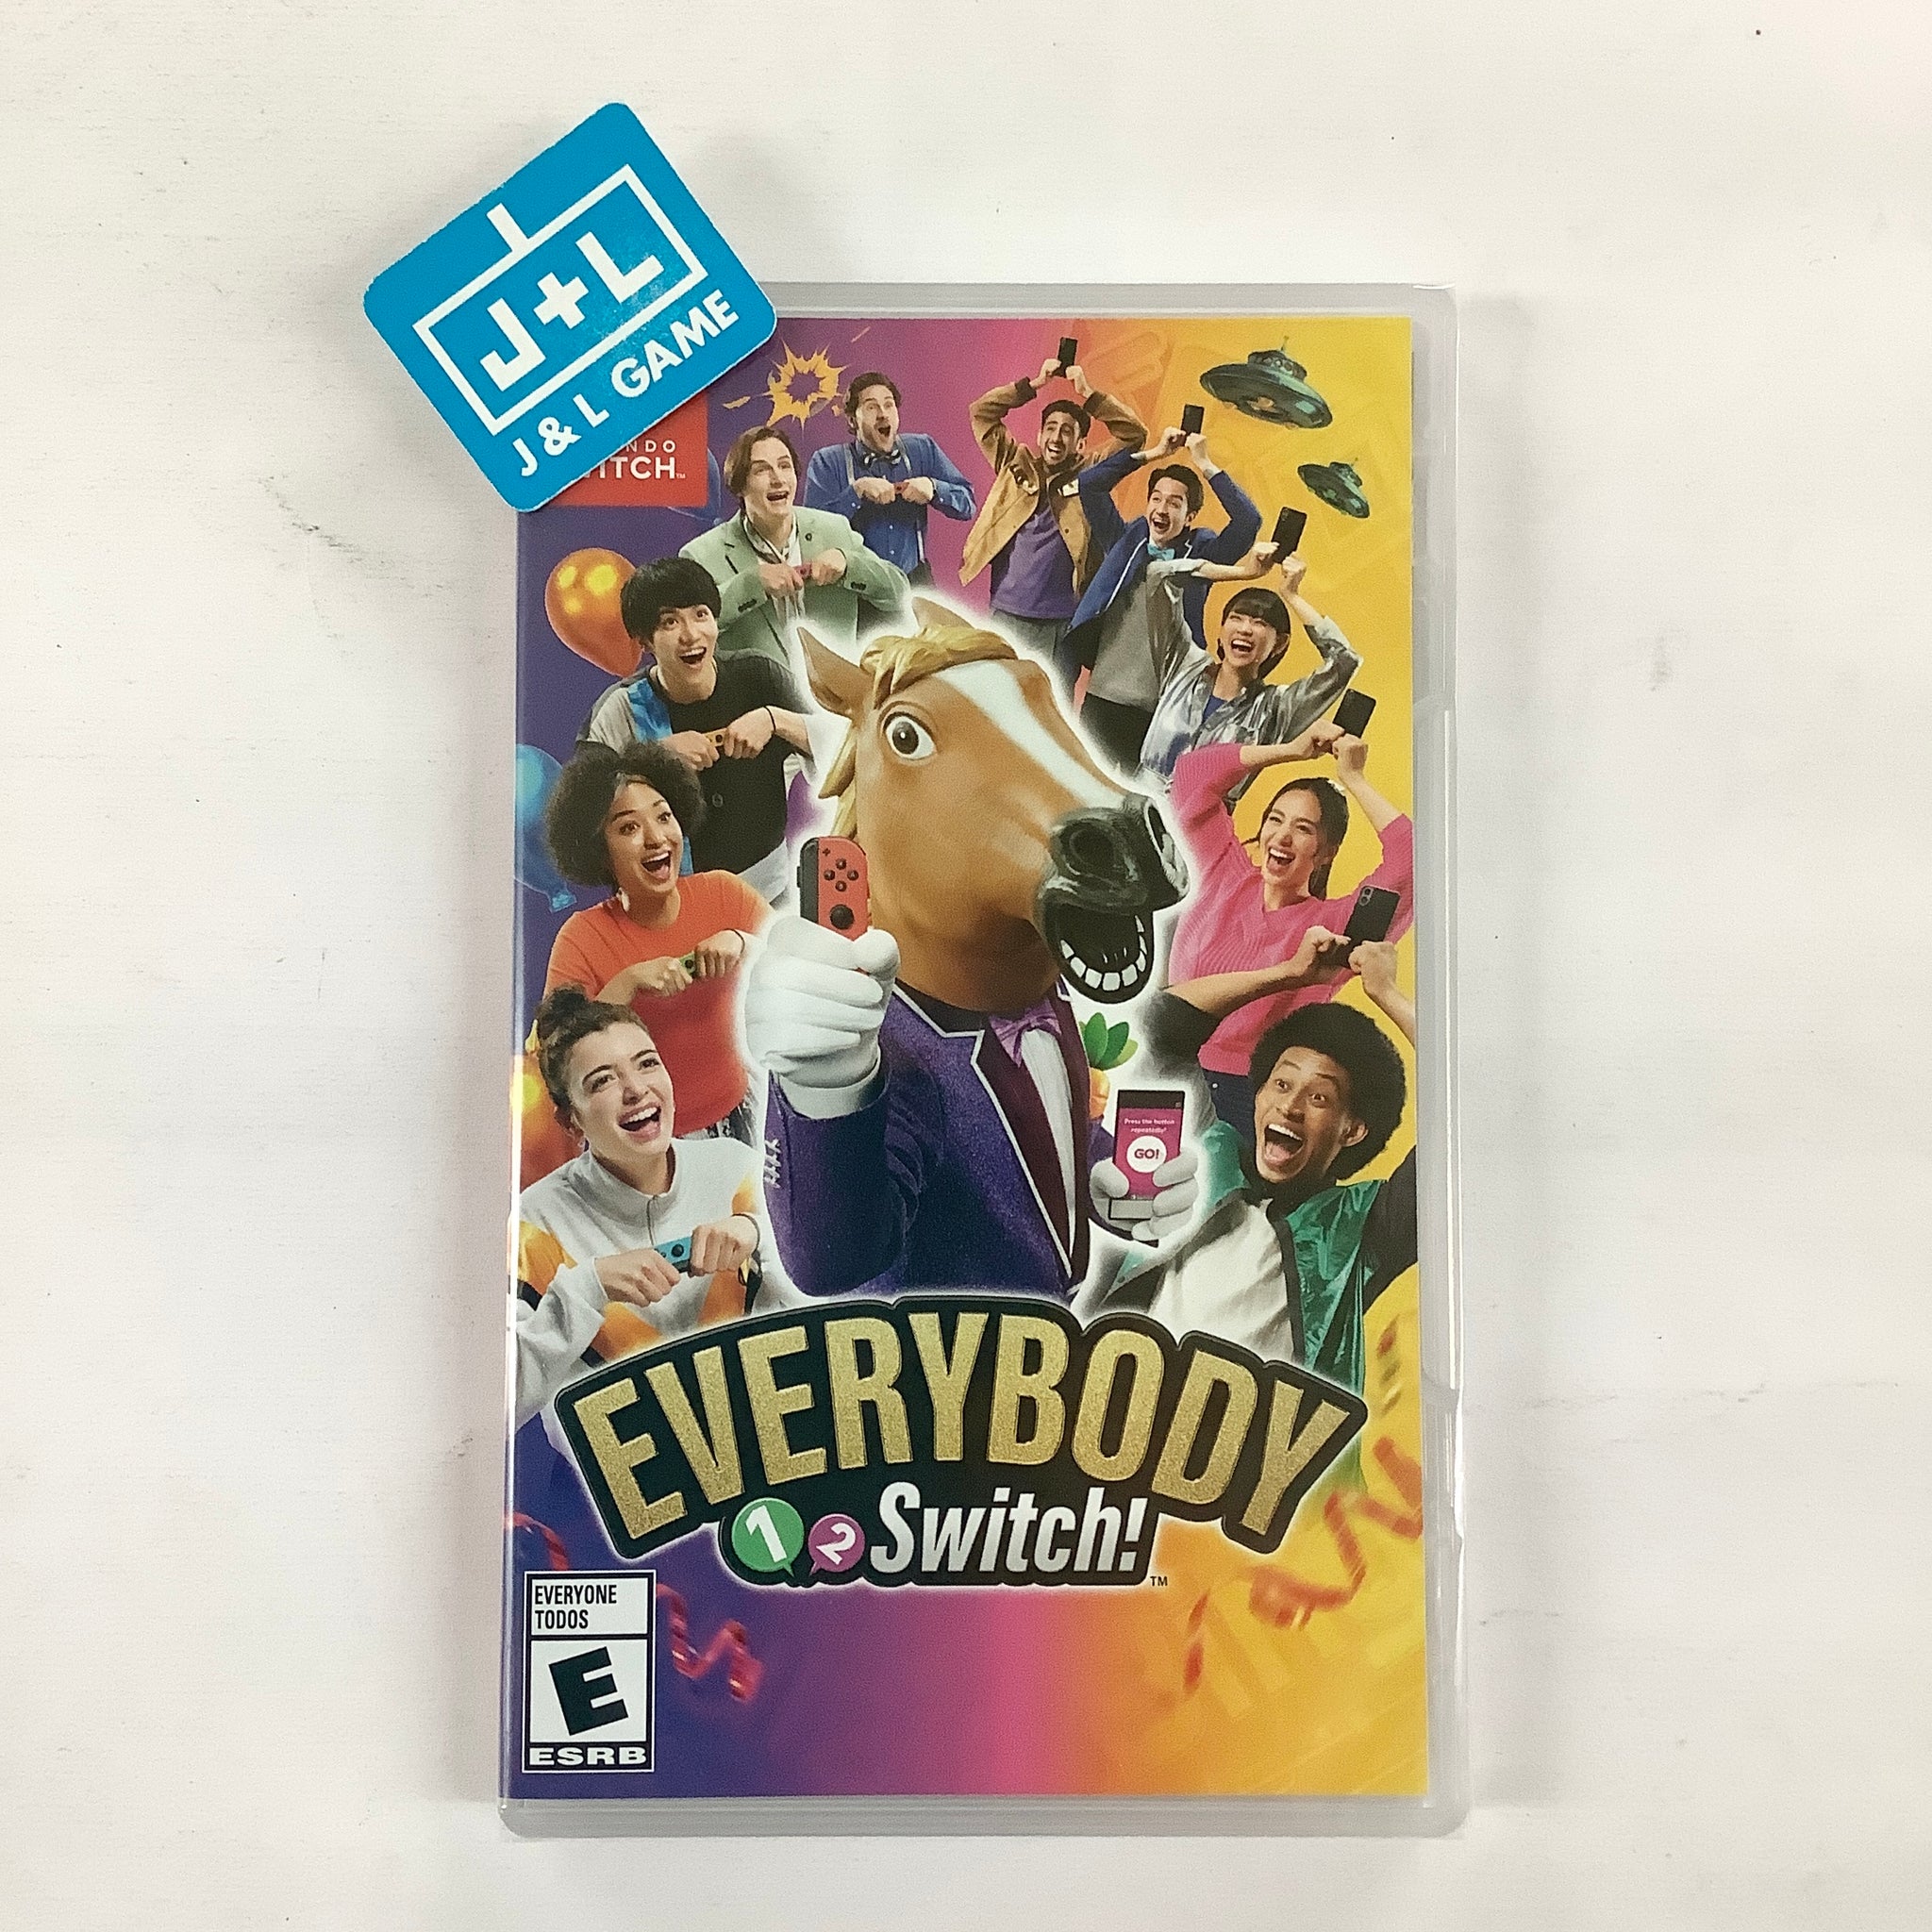 Everybody 1-2 Switch! - (NSW) Nintendo Switch Video Games Nintendo   